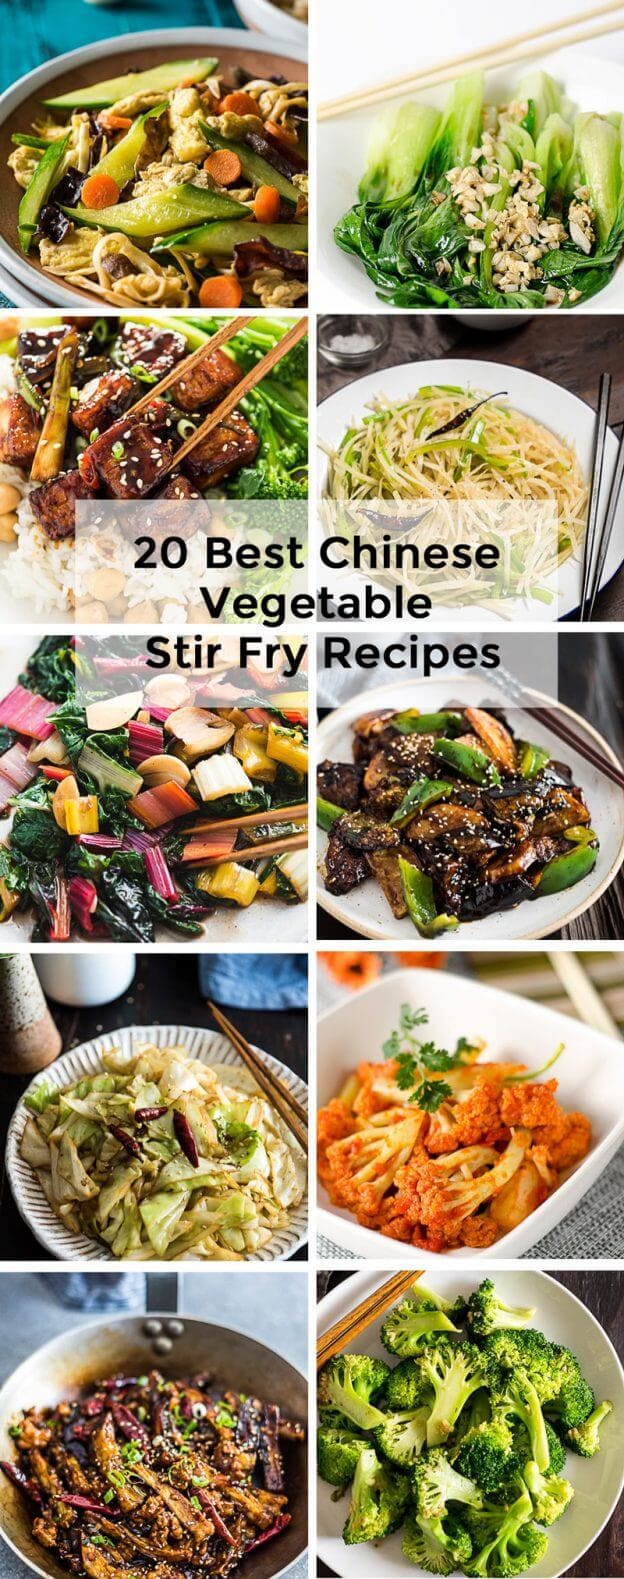 20 Best Chinese Vegetable Stir Fry Recipes - Omnivore's Cookbook